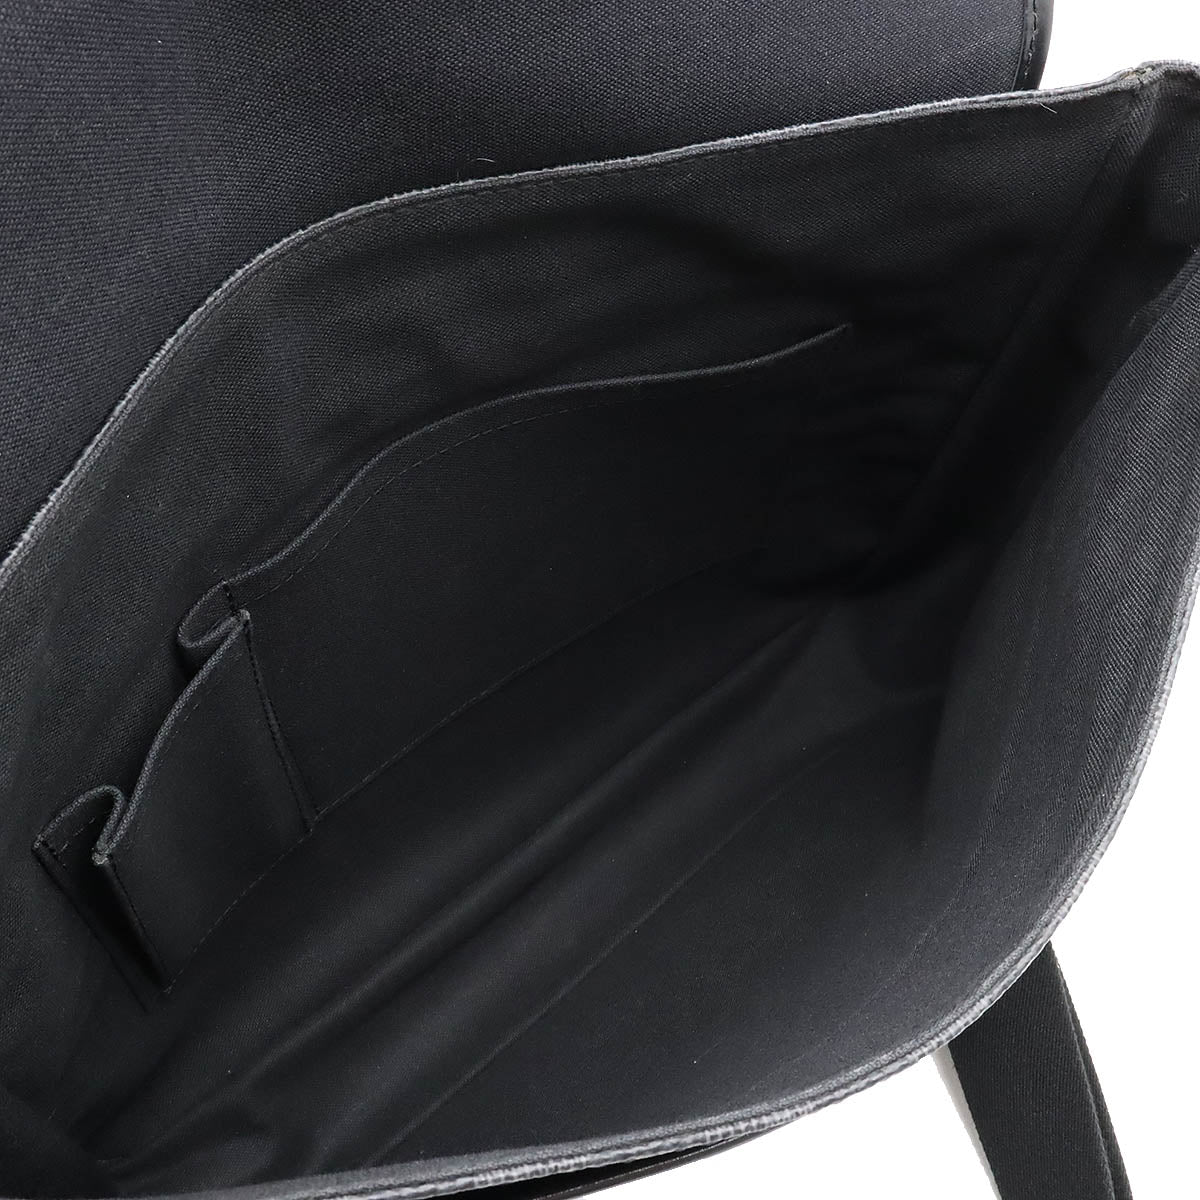 Louis Vuitton LV SHW Daniel MM Shoulder Bag N58029 Damier Graphite Black